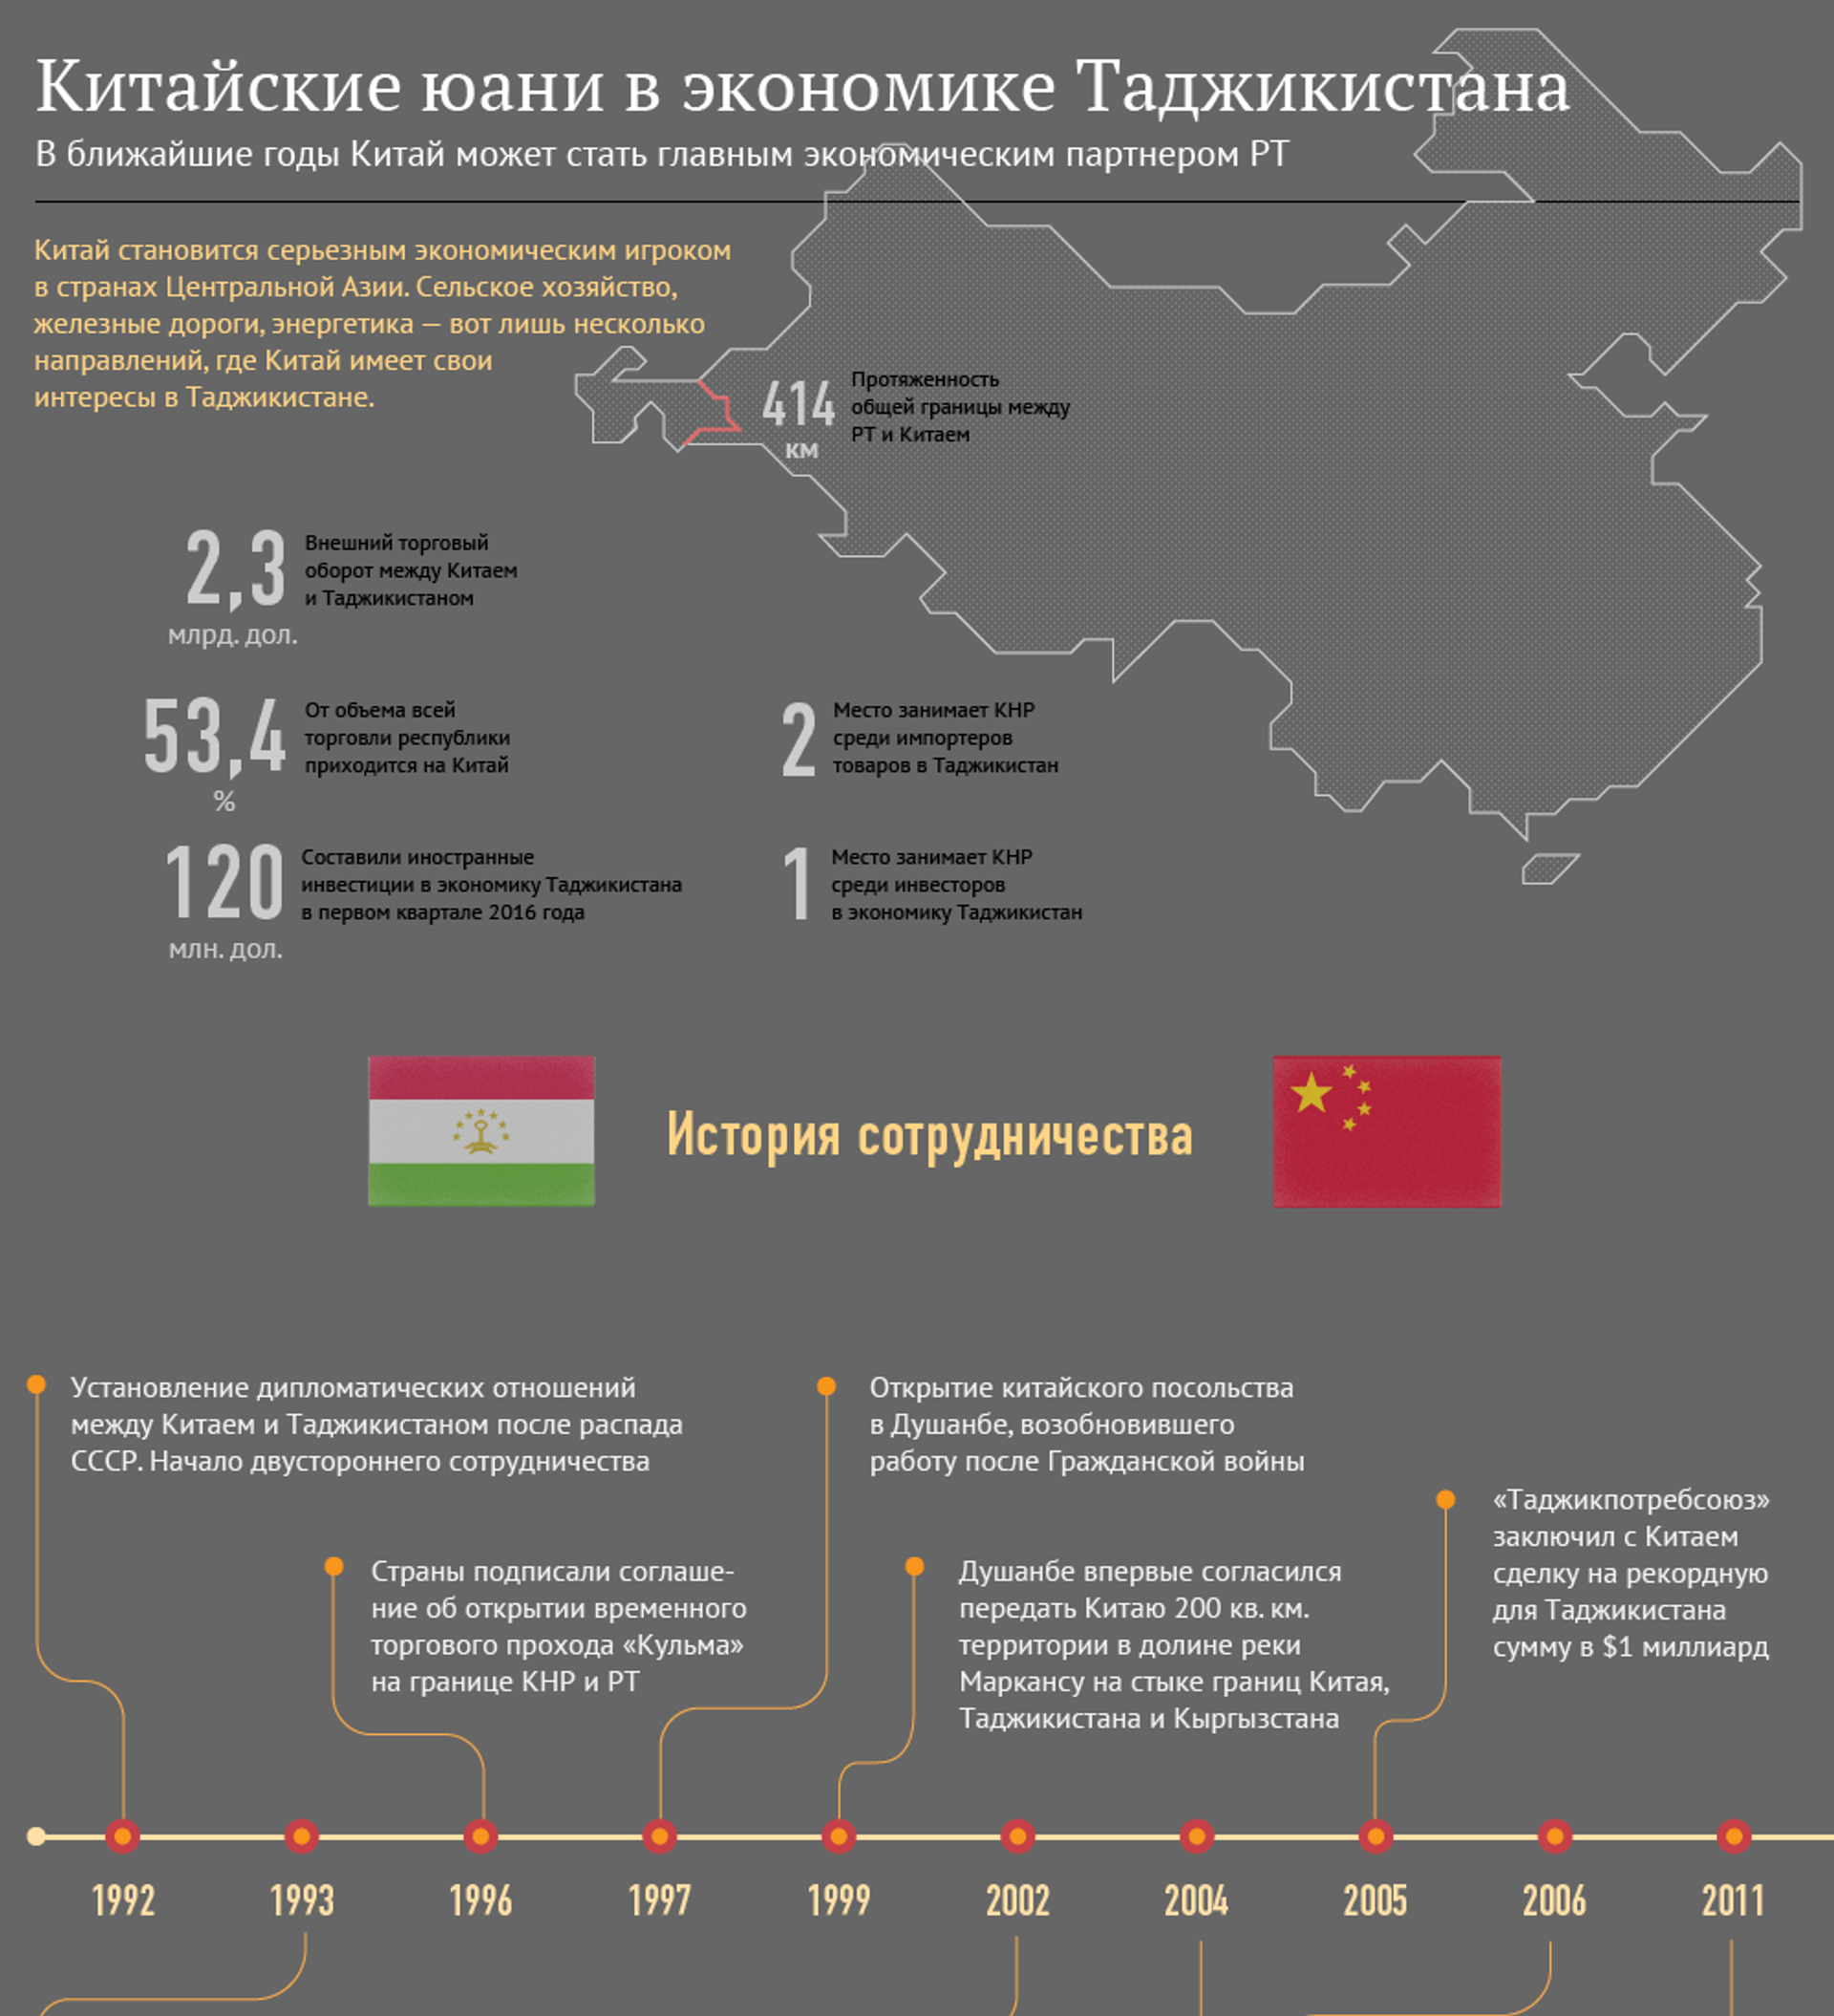 Таджикские территории. Спорные территории Китая и Таджикистана. Инвестиции в экономику Таджикистана. Территория Таджикистана переданная Китаю. Граница между Таджикистаном и Китаем.